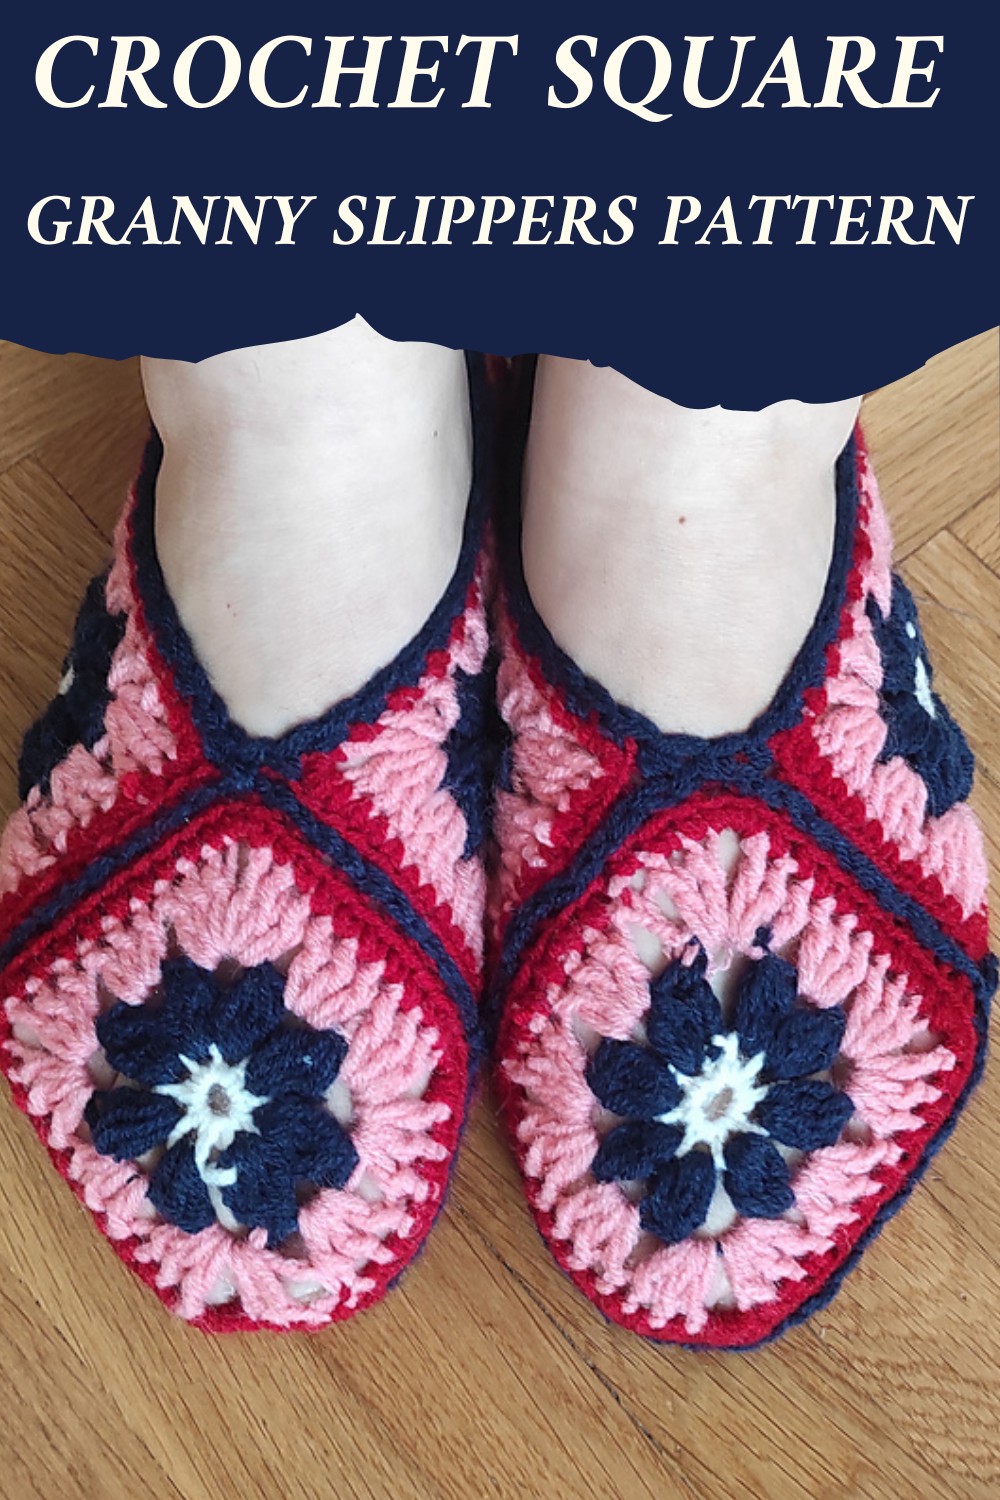 Crochet Square Granny Slippers Pattern